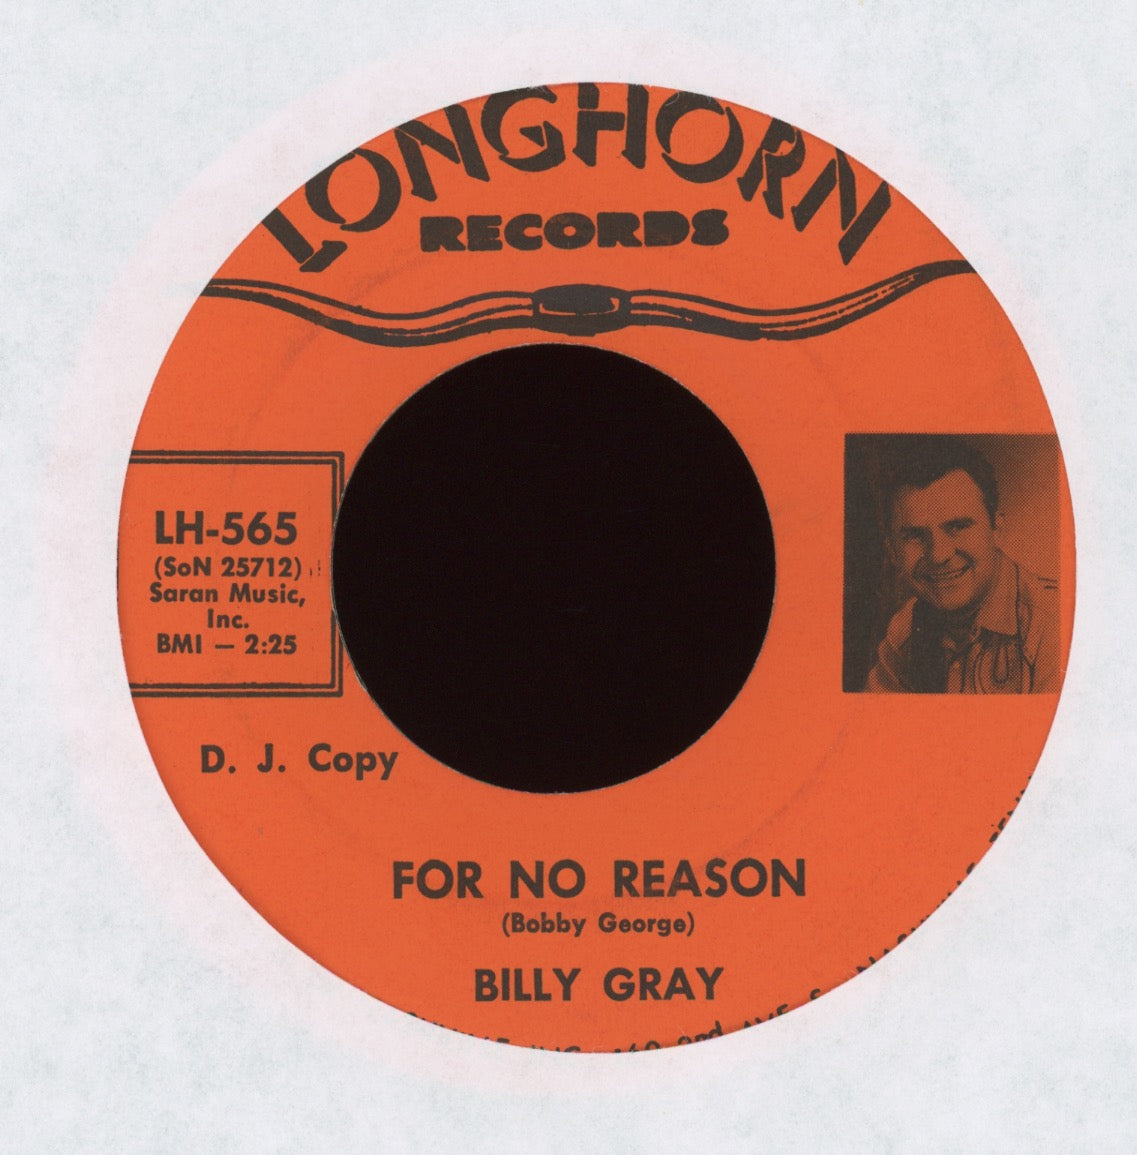 Billy Gray - Rotten Love on Longhorn Promo